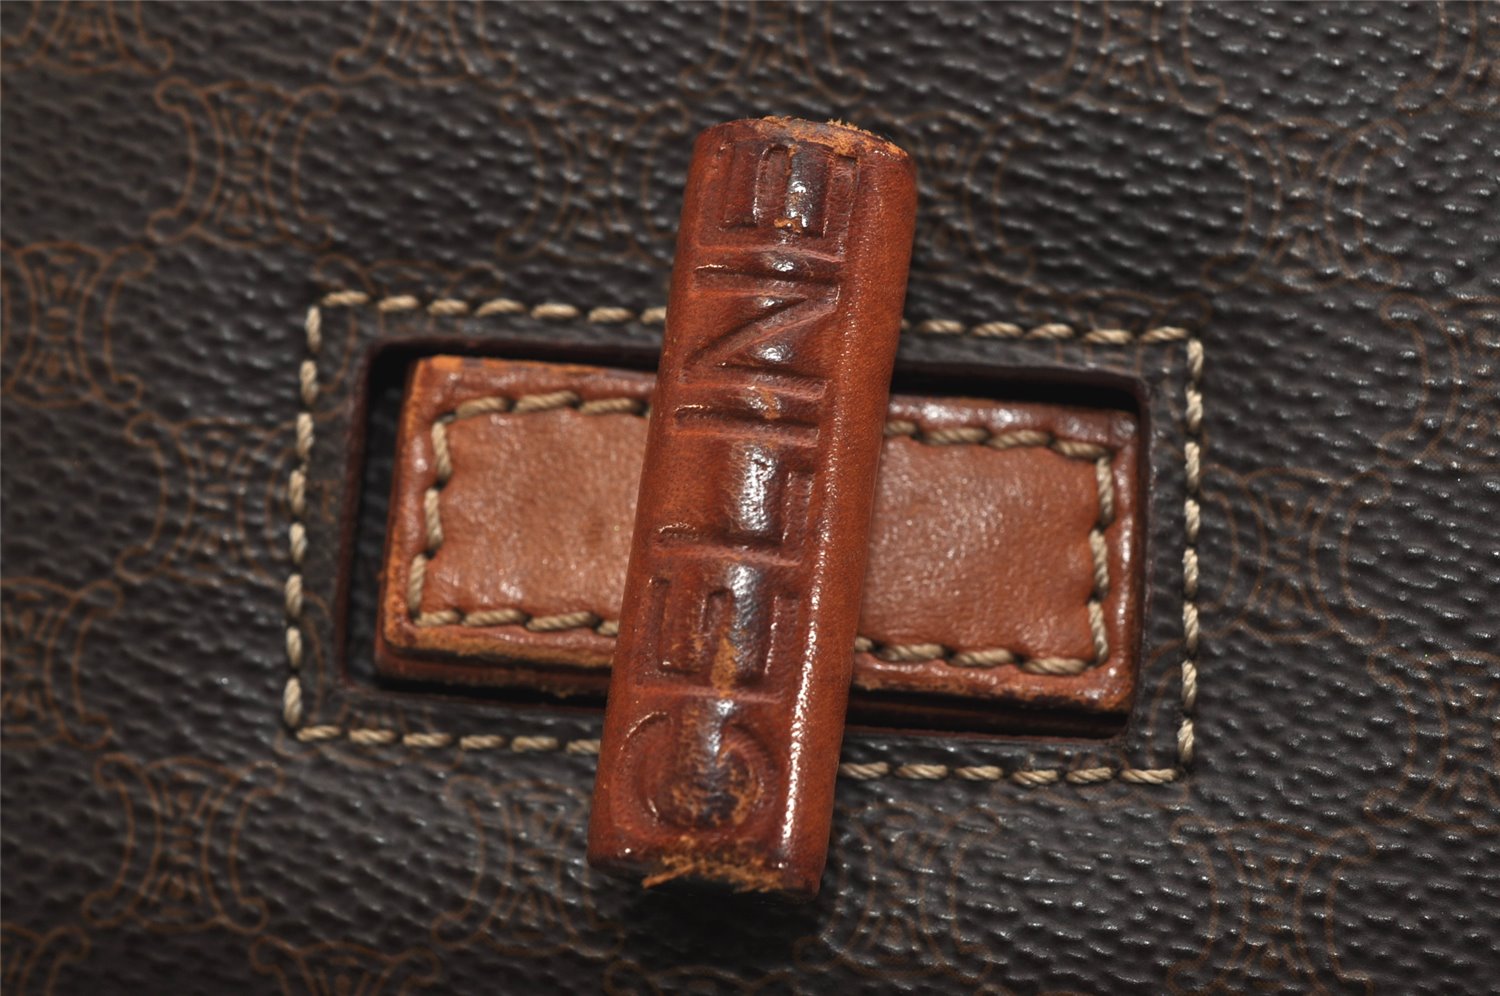 Authentic CELINE Macadam Blason Shoulder Cross Body Bag PVC Leather Brown 0457K